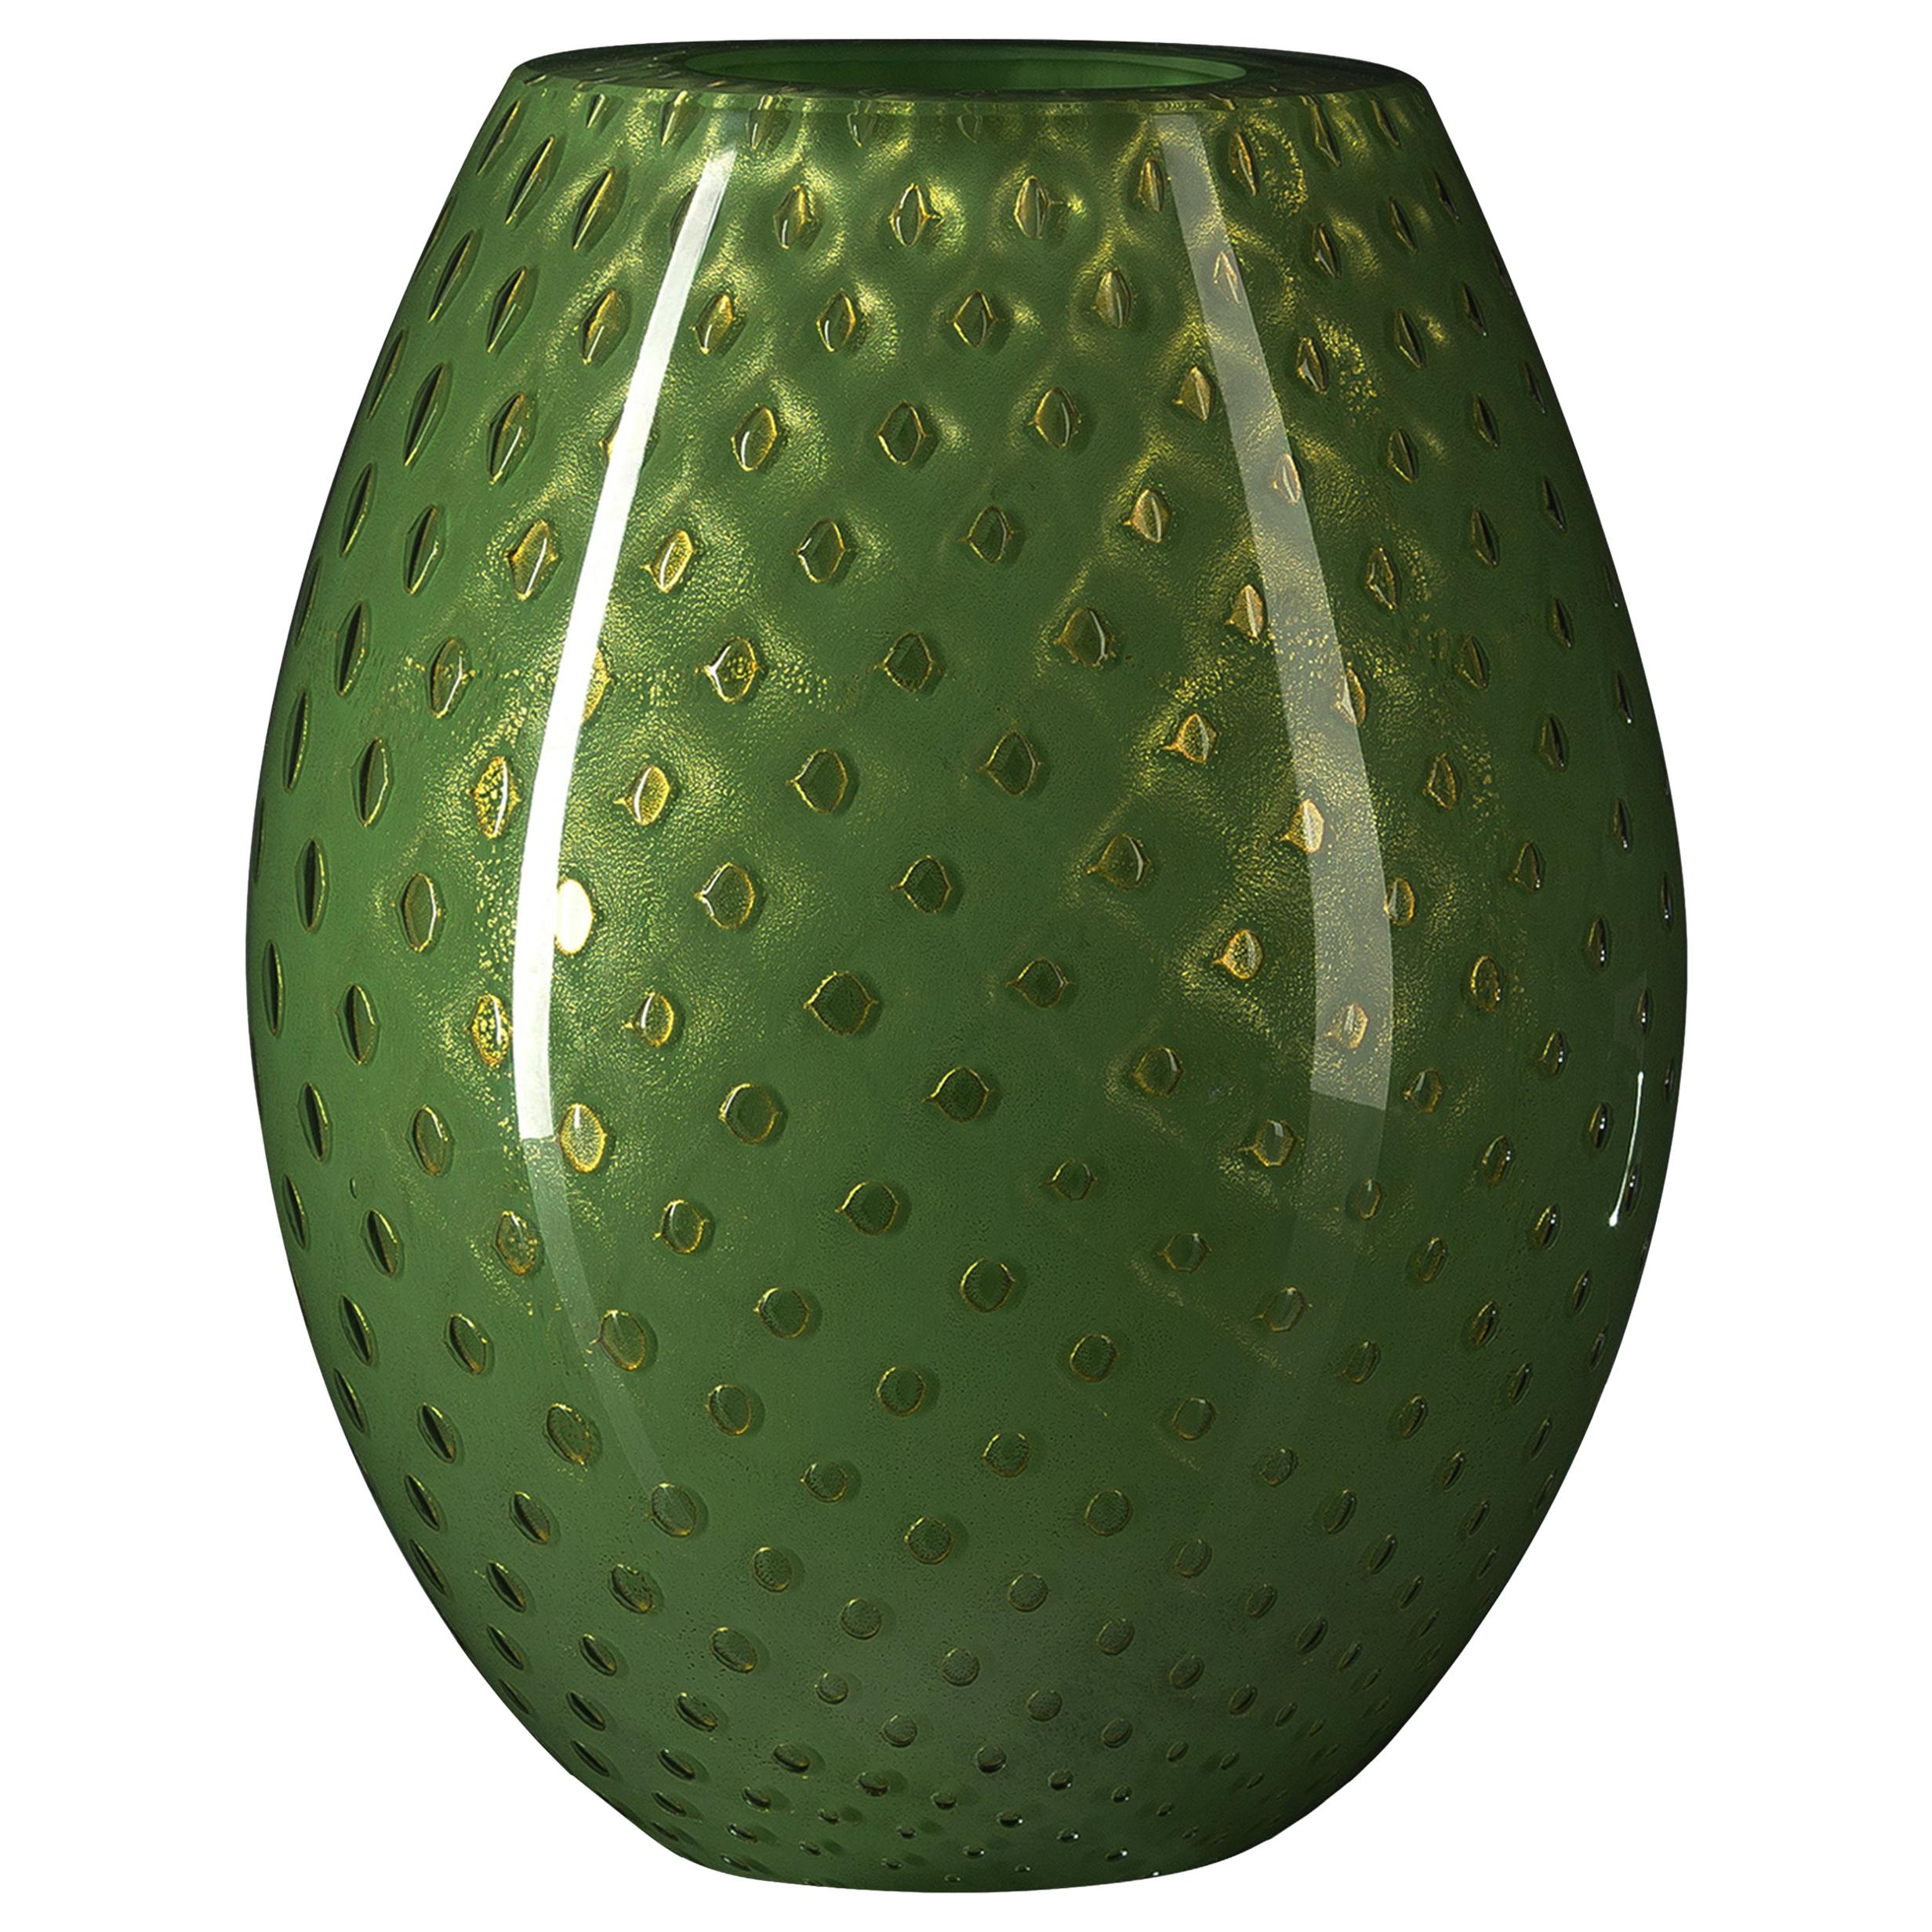 Ovale Vase Mocenigo, Muranoglas, Gold 24-Karat und Dunkelgrün, Italien